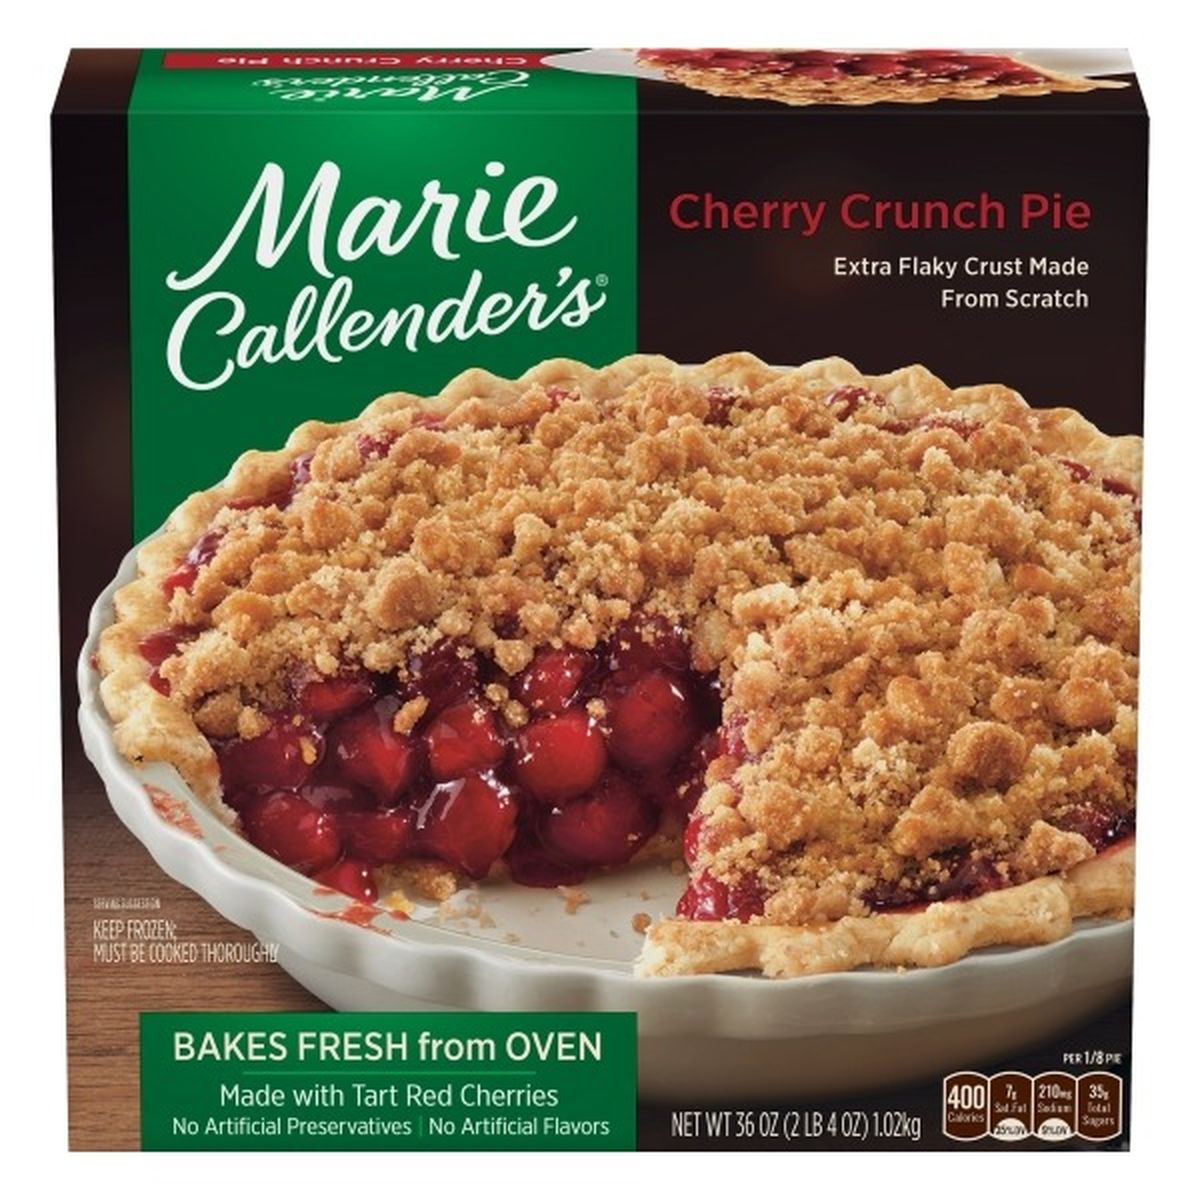 Calories in Marie Callender's Cherry Crunch Pie